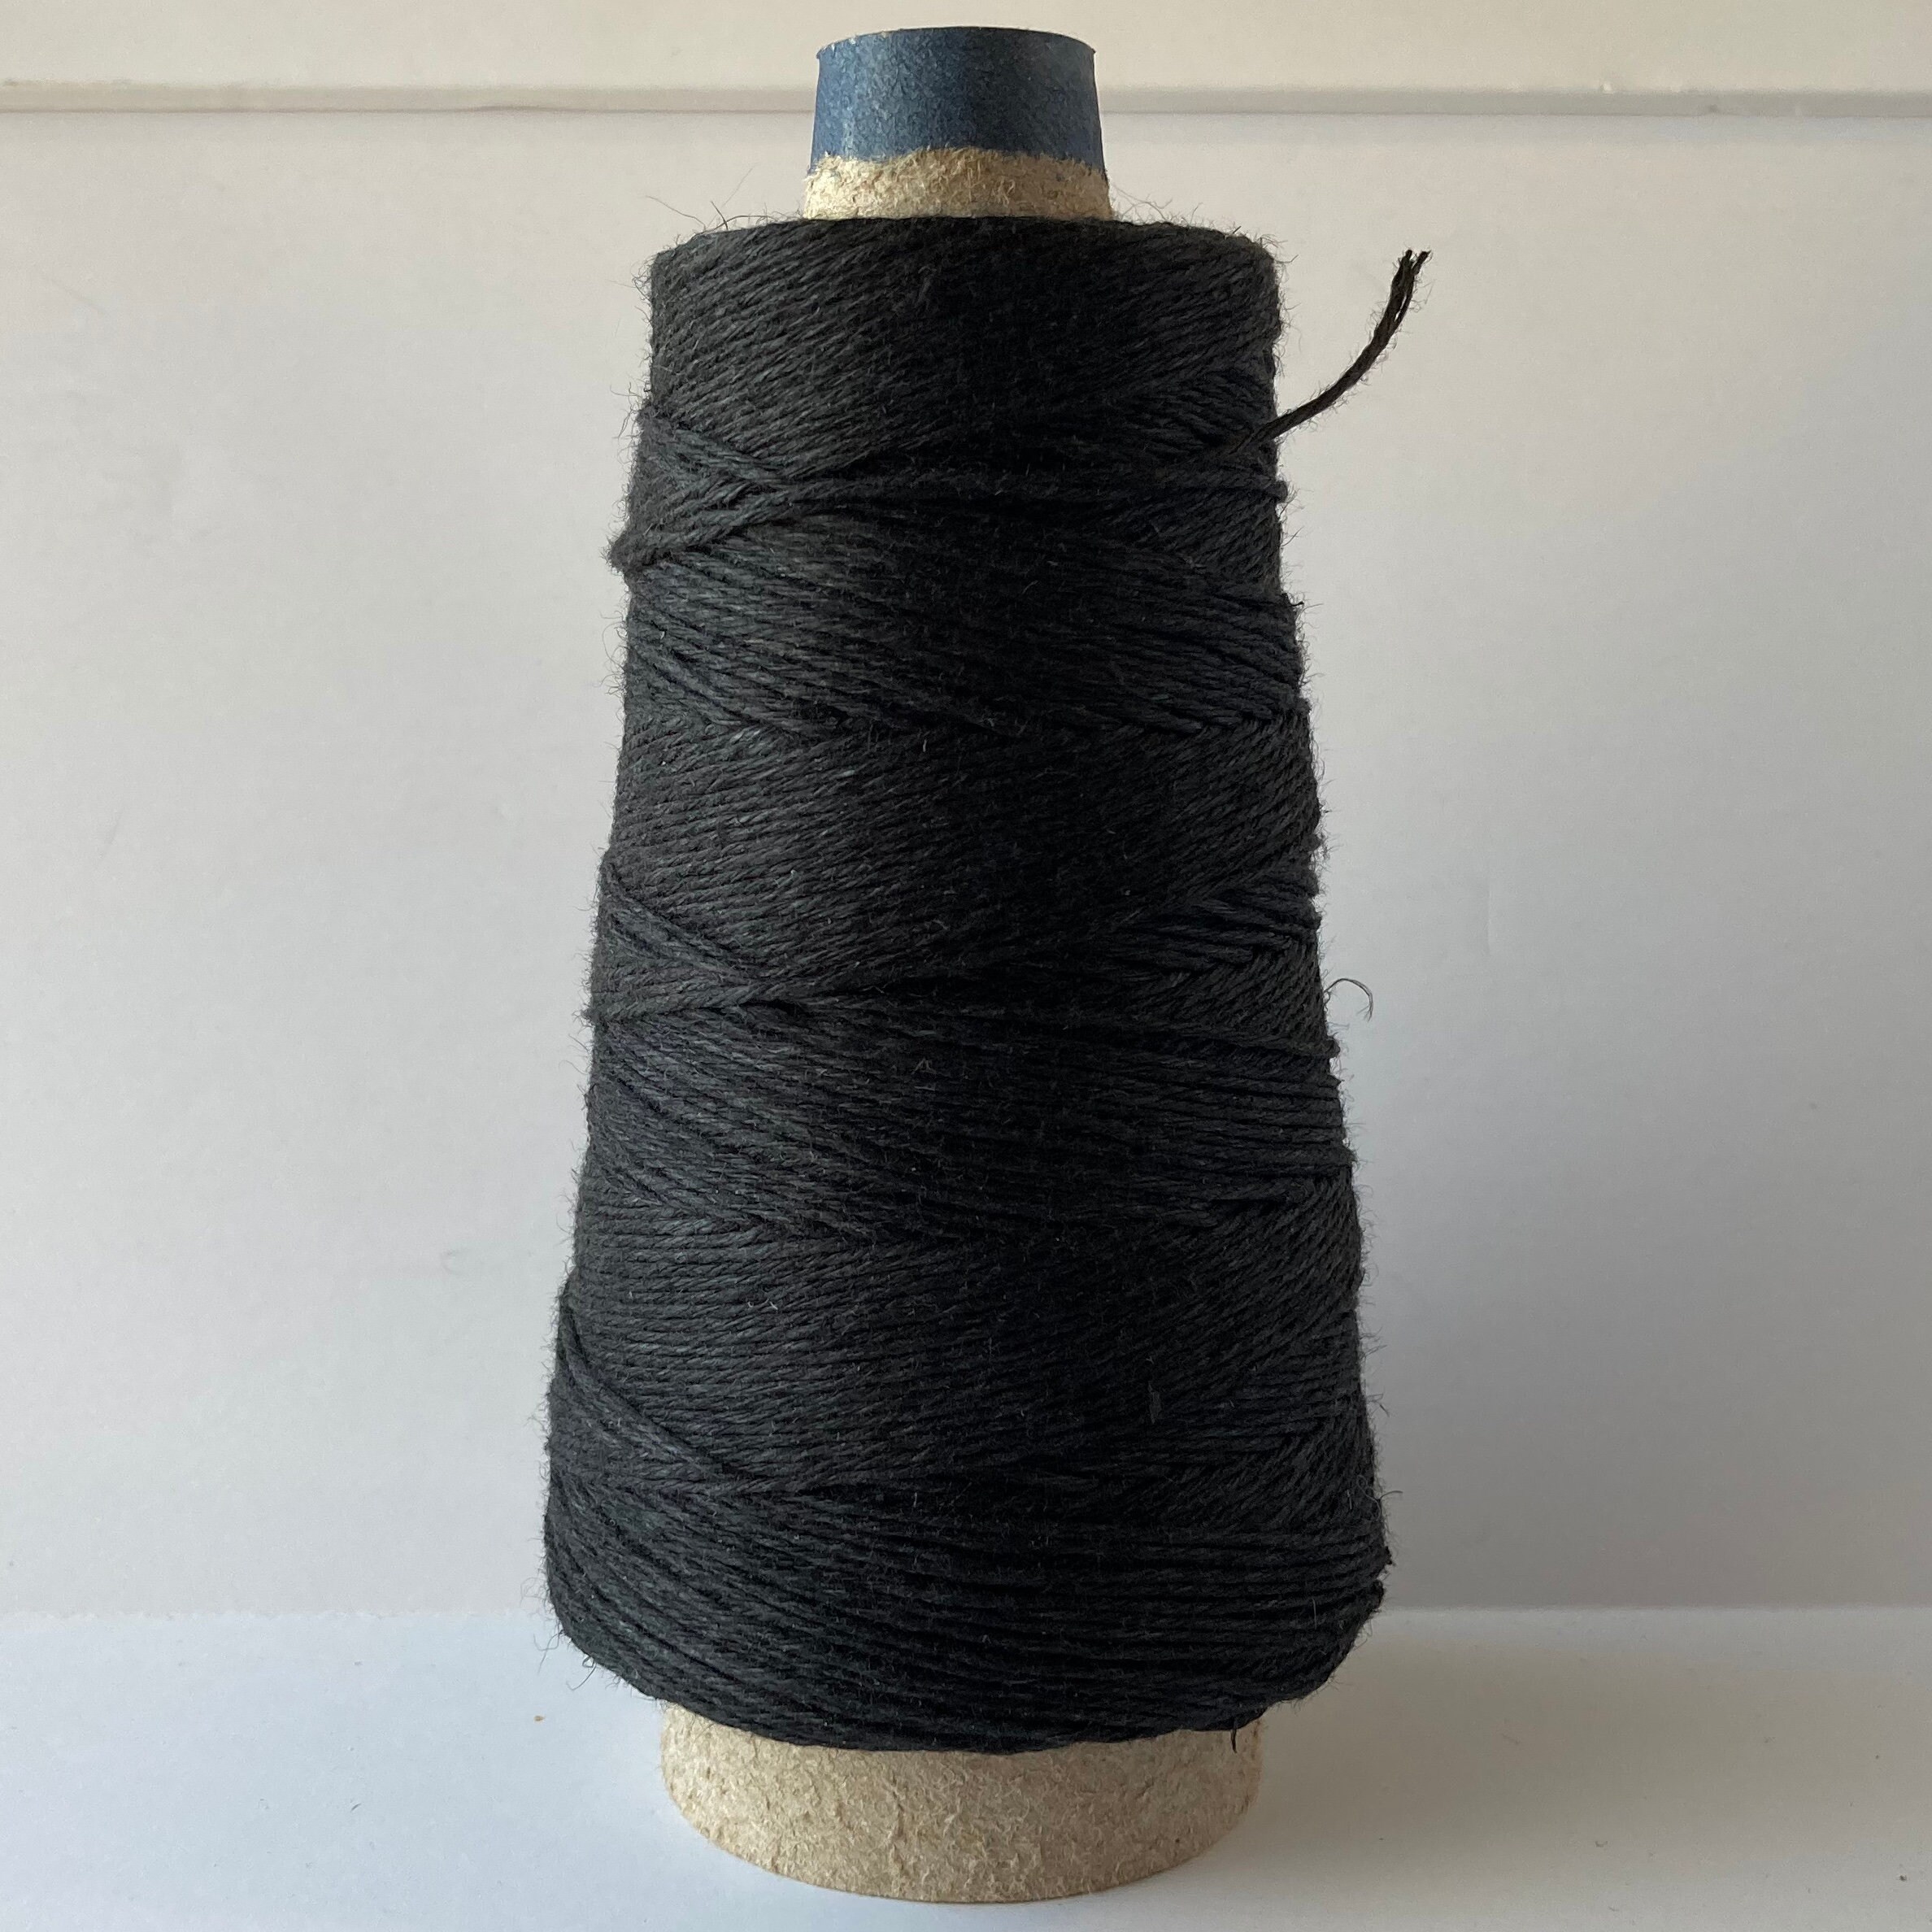 Unwaxed Linen Thread - Samson Historical